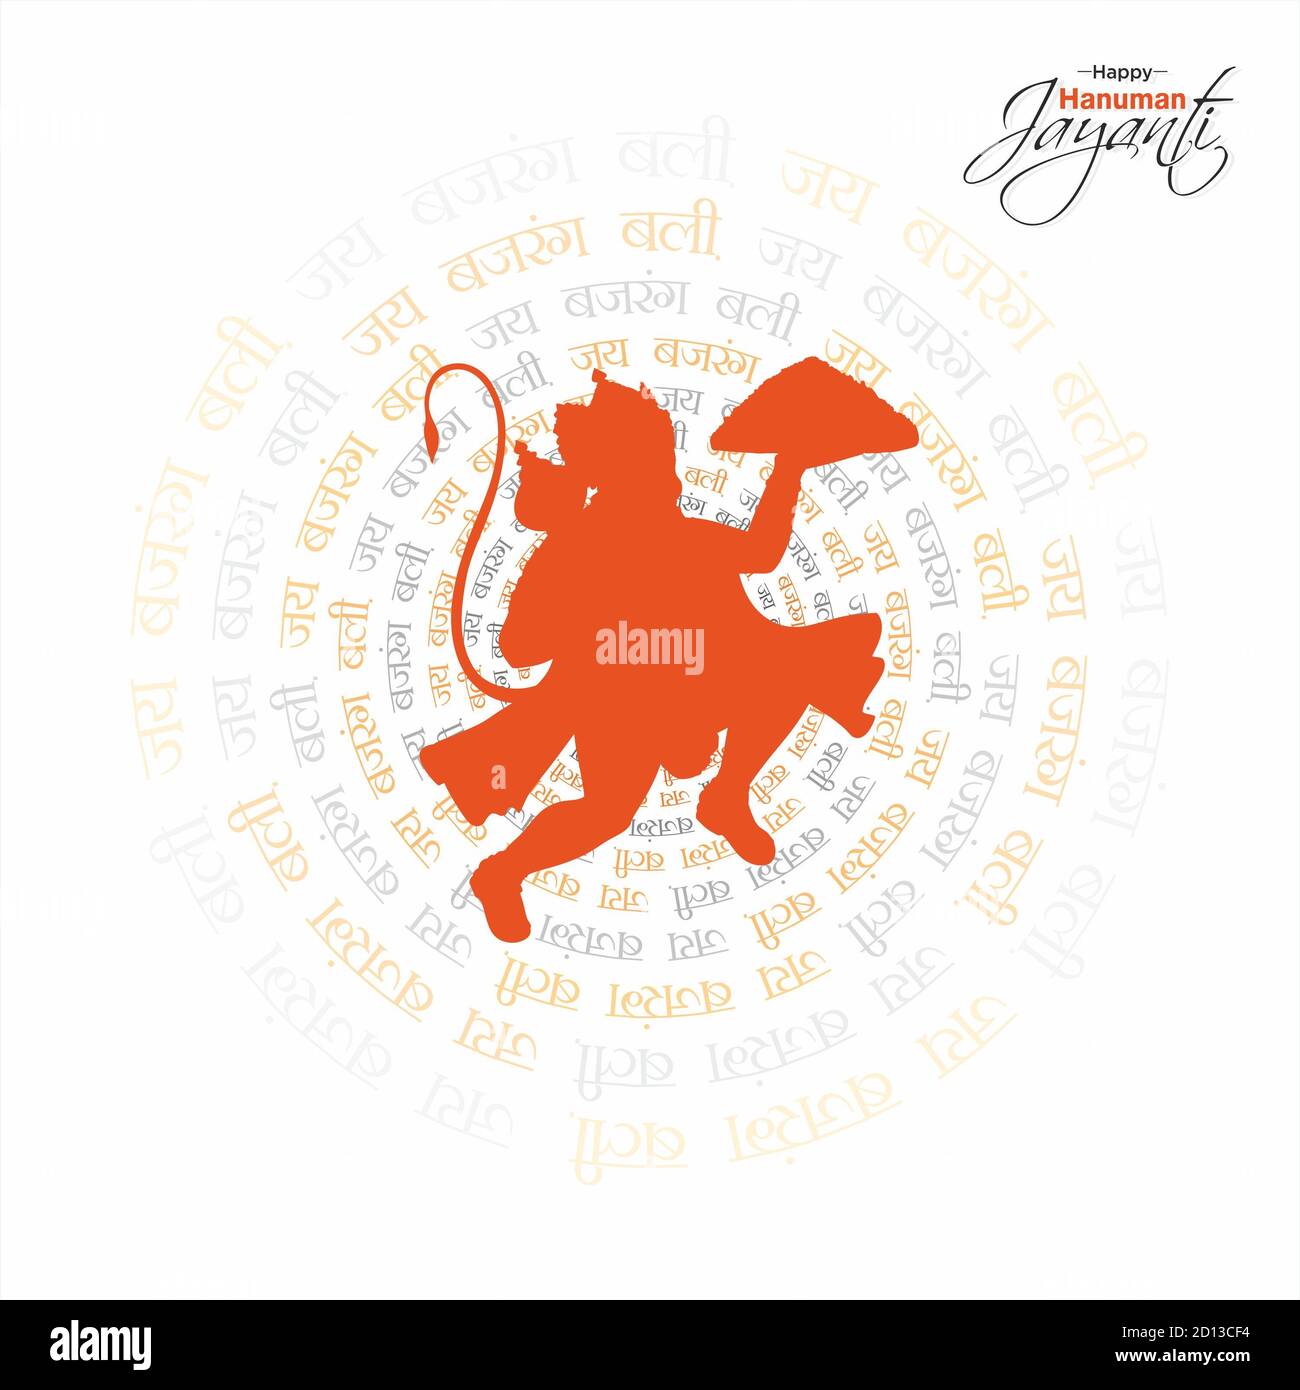 Hindi Typografie Happy Hanuman Jayanti Ki Banner Herr Stockfoto